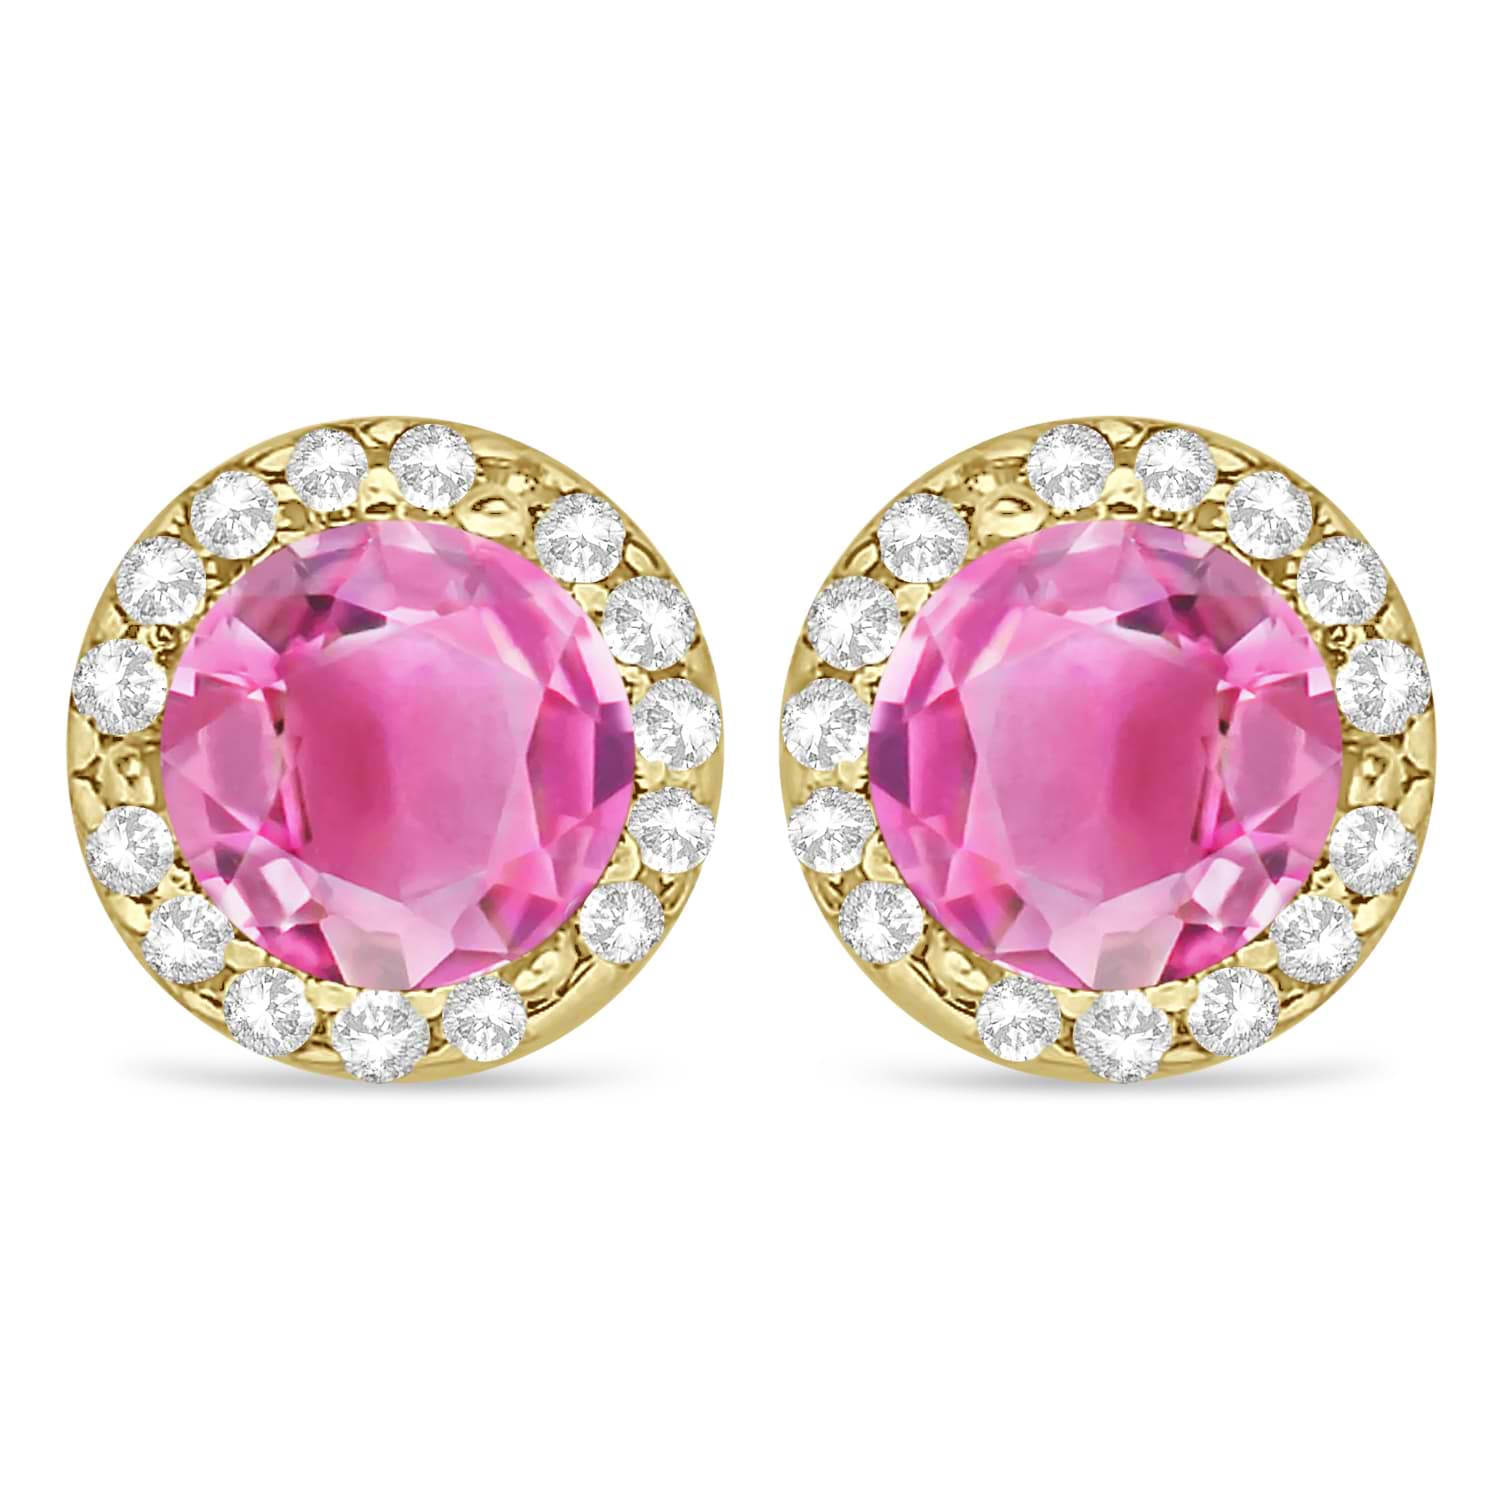 Diamond and Pink Tourmaline Earrings Halo 14K Yellow Gold (1.15tcw)